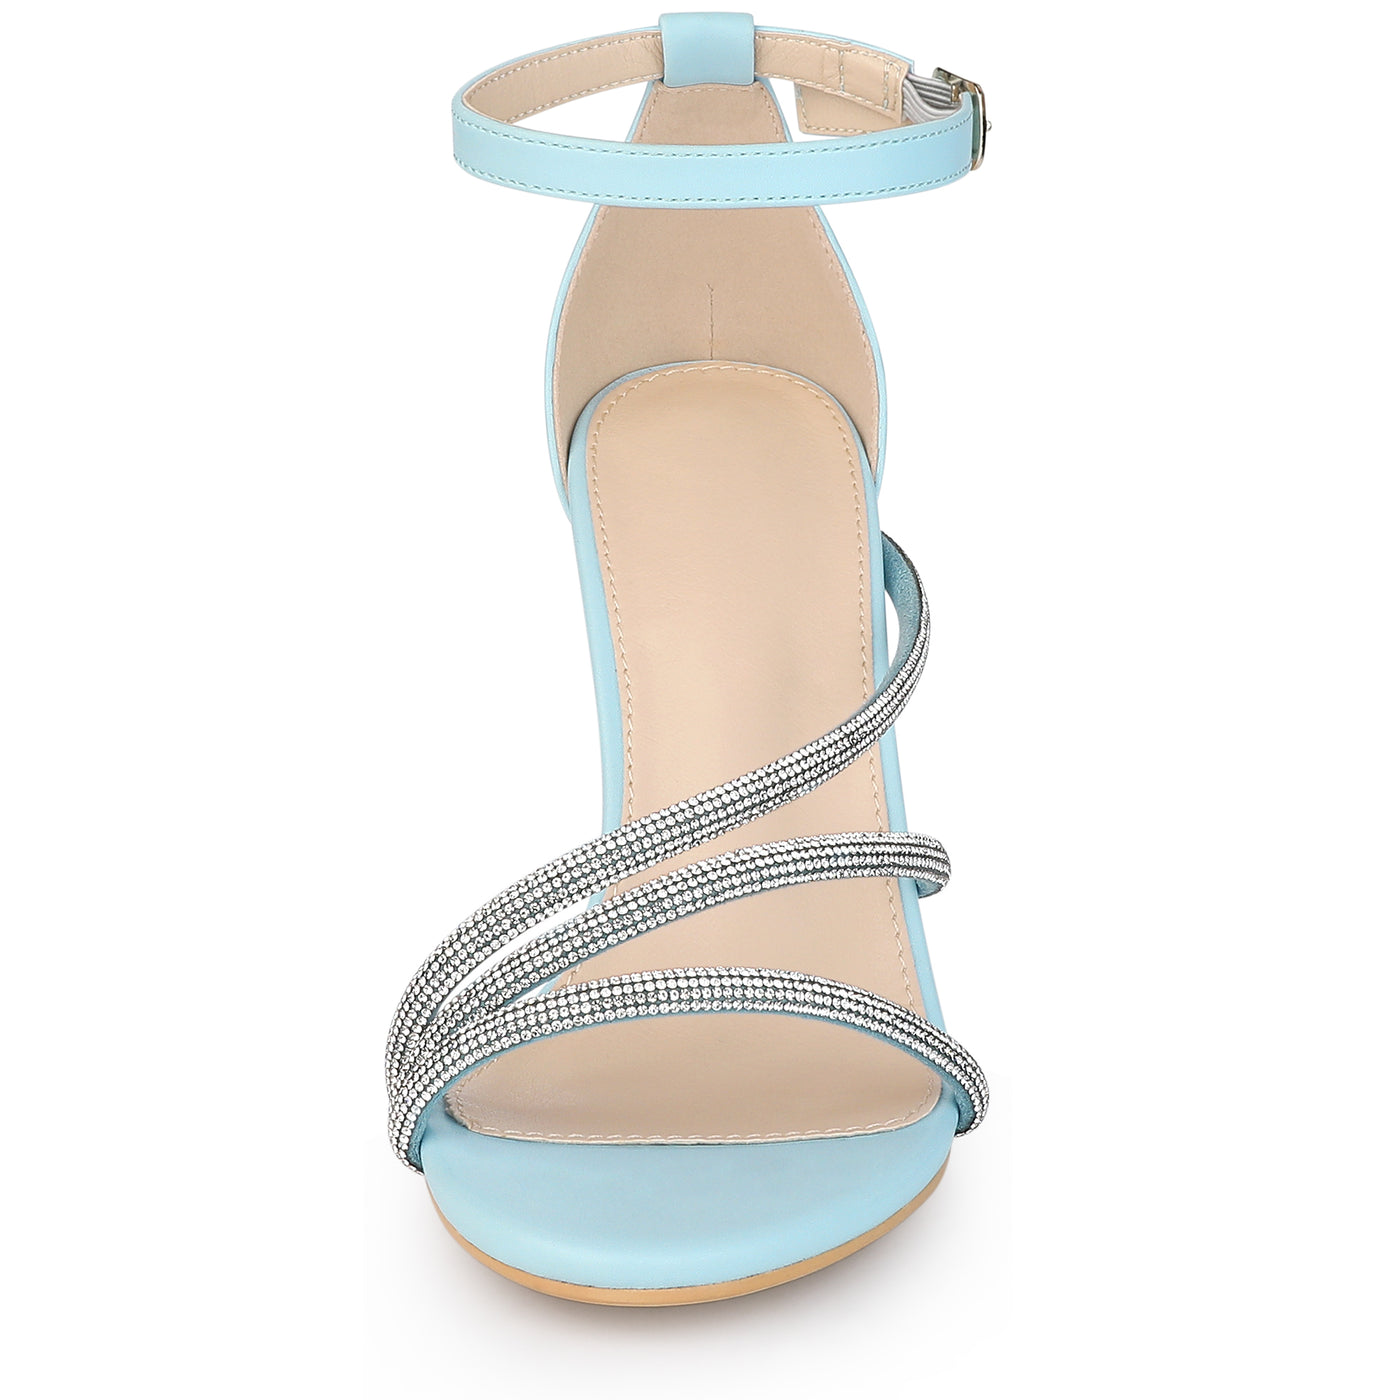 Allegra K Women's Open Toe Rhinestone Strappy Stiletto Heels Sandals